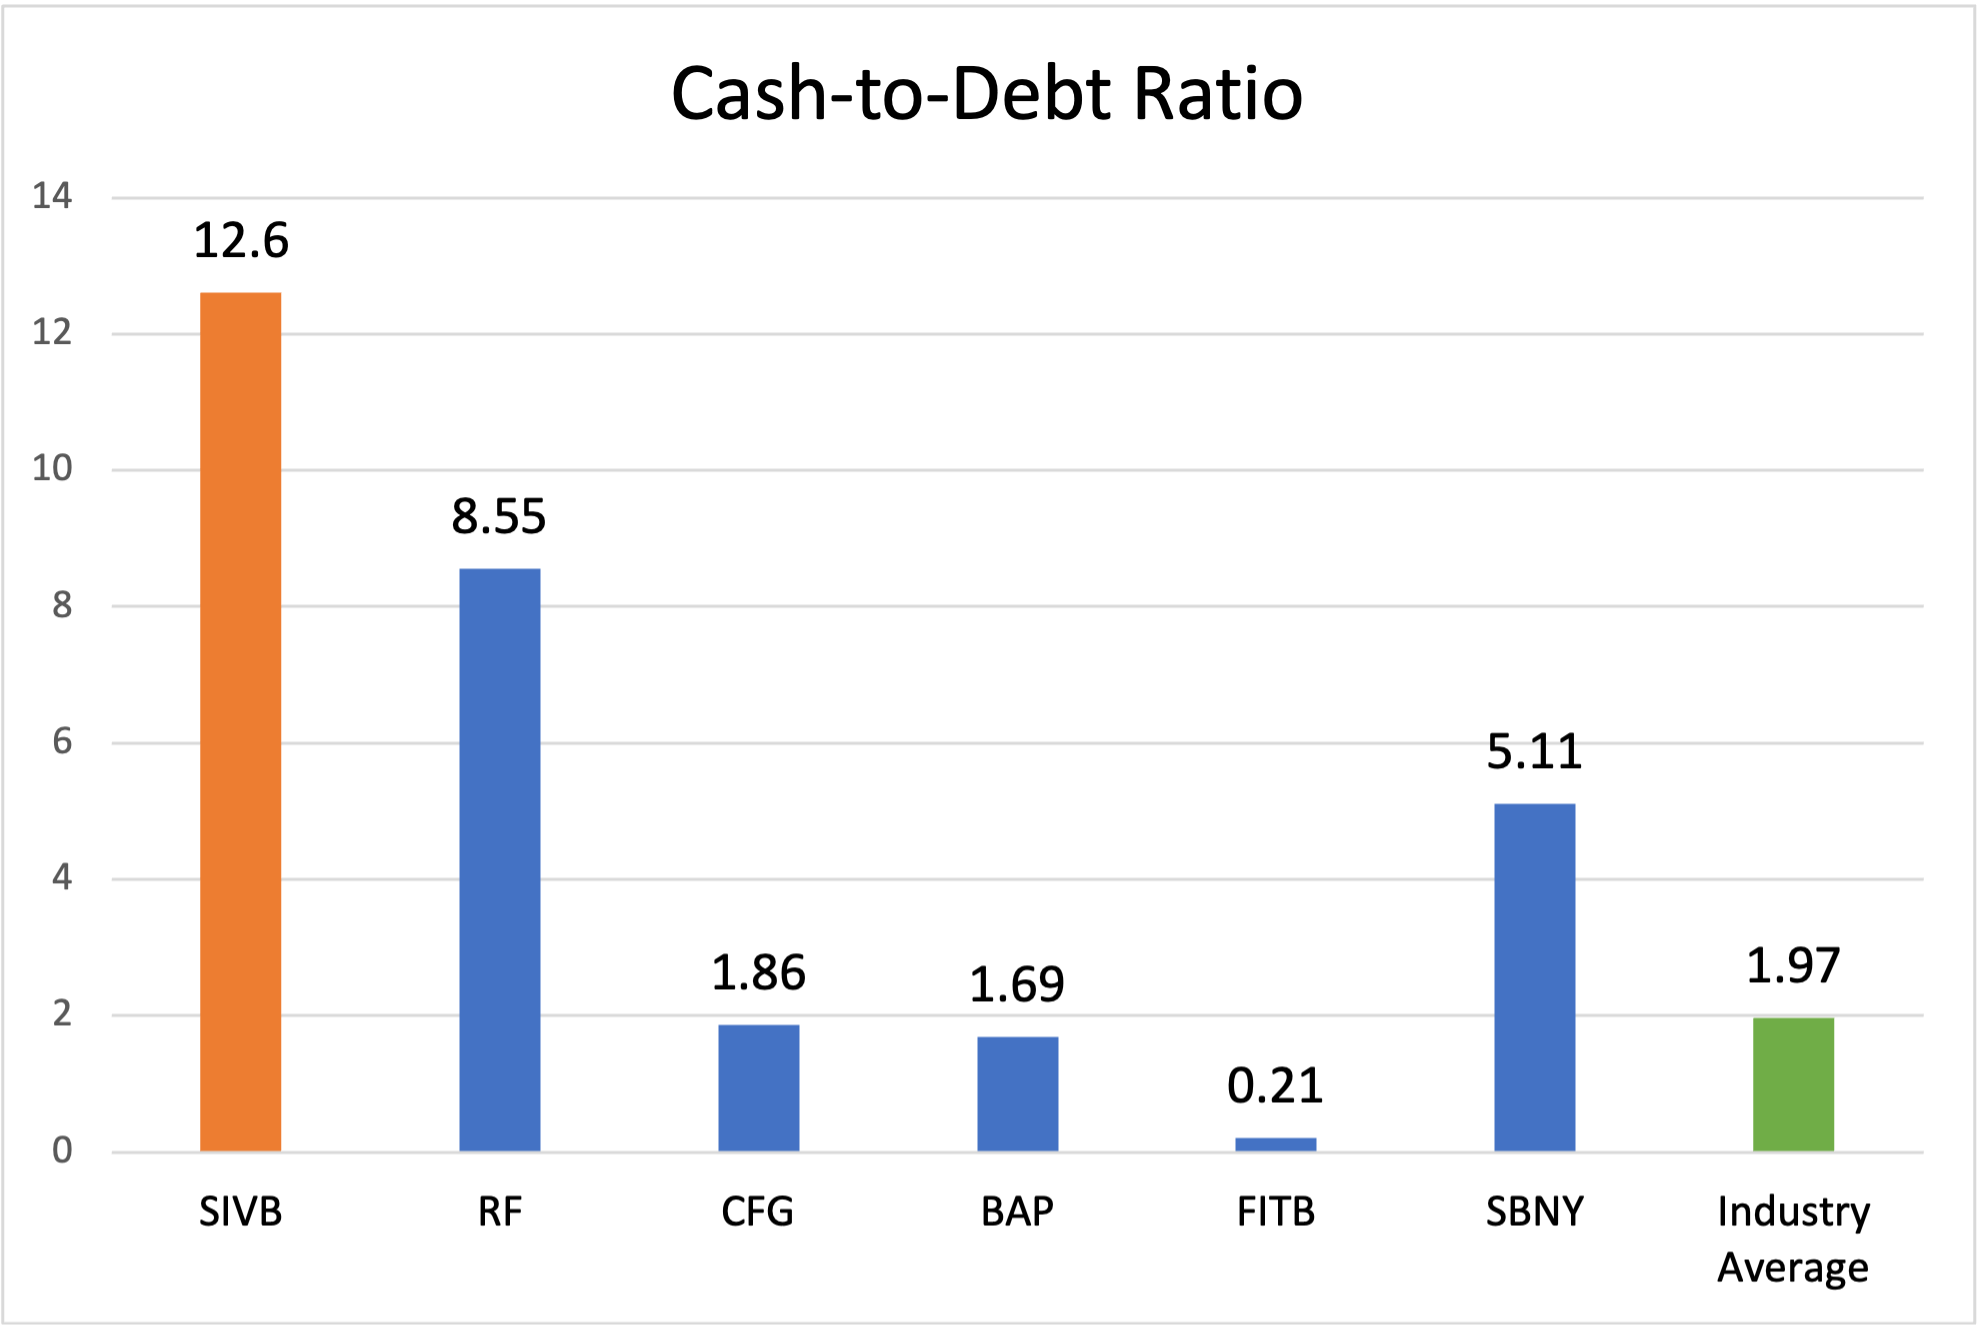 SIVB: Cash-to-Debt Ratio